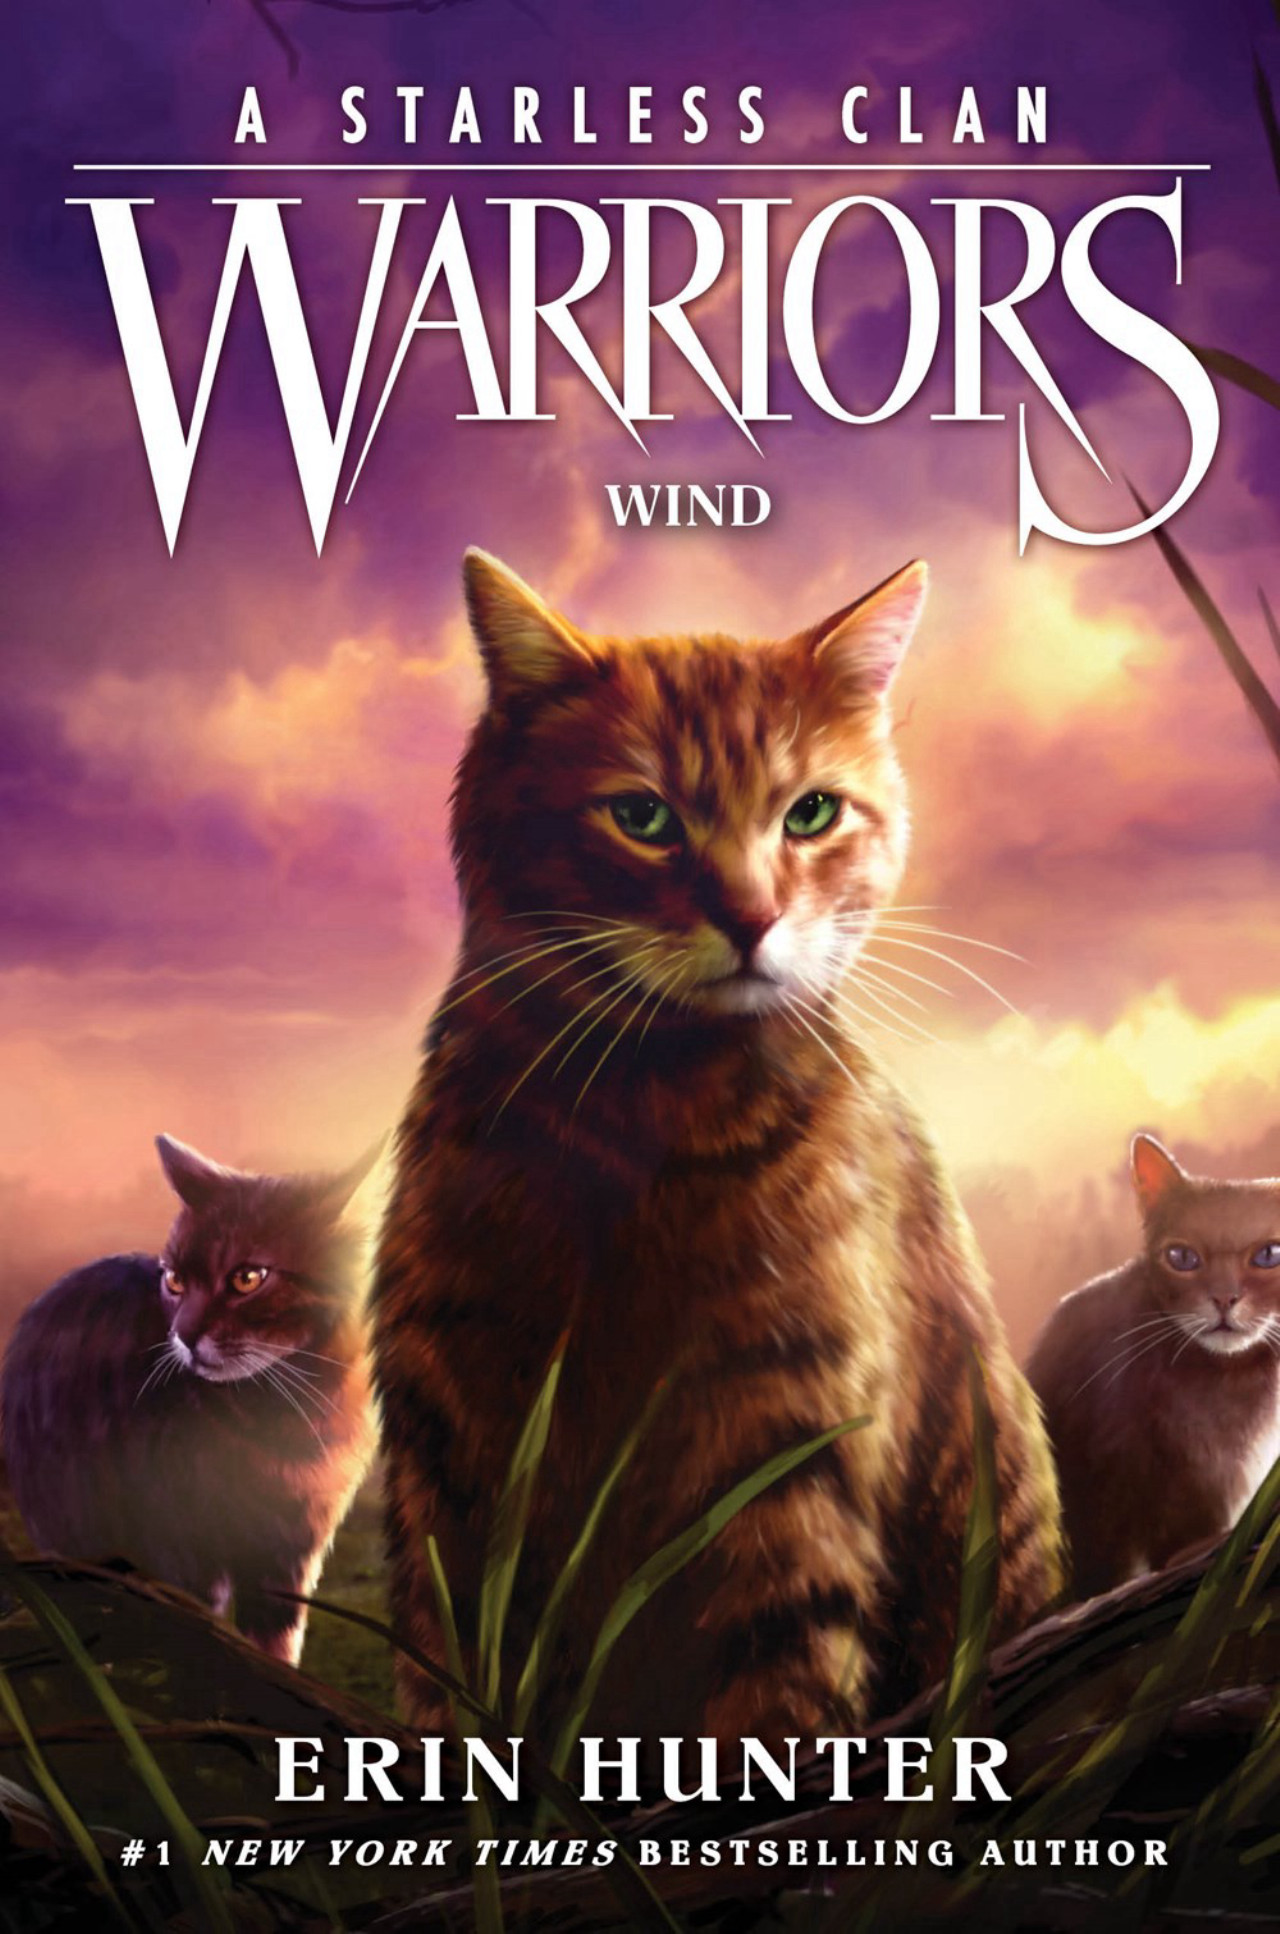 warrior cats